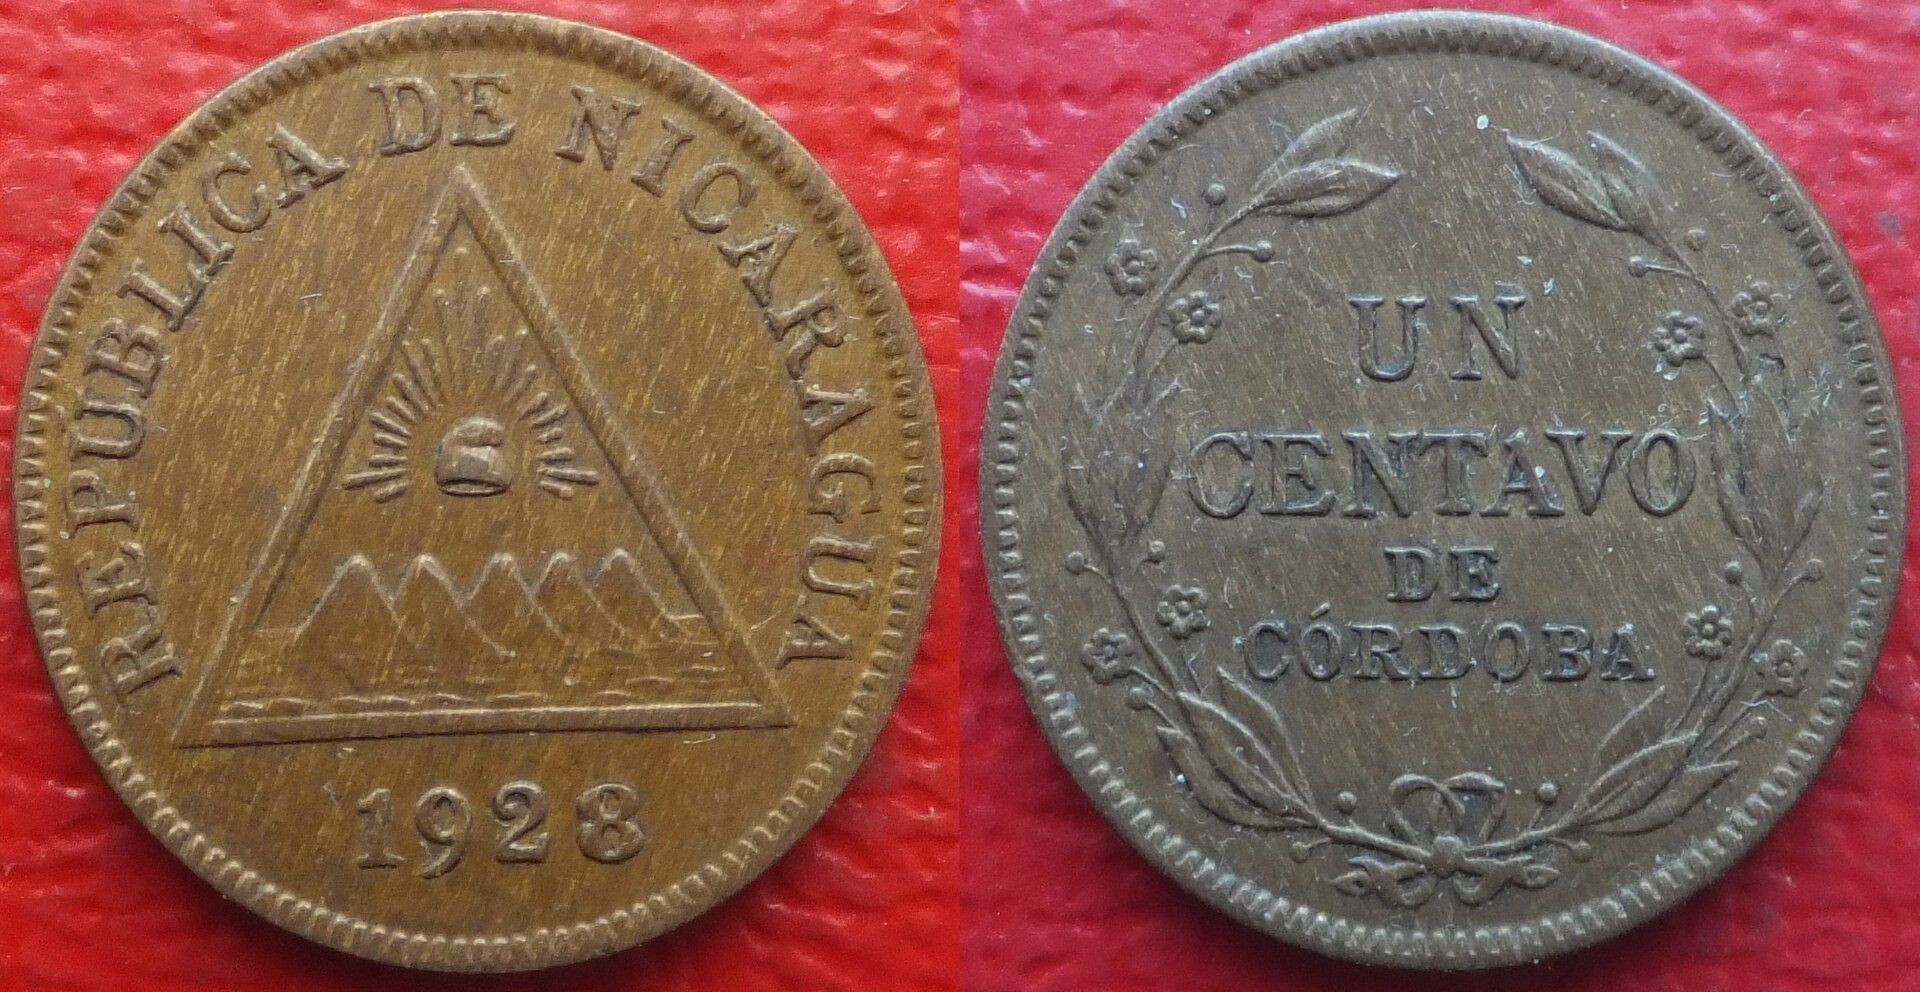 Nicaragua 1 centavo 1928 (3).jpg